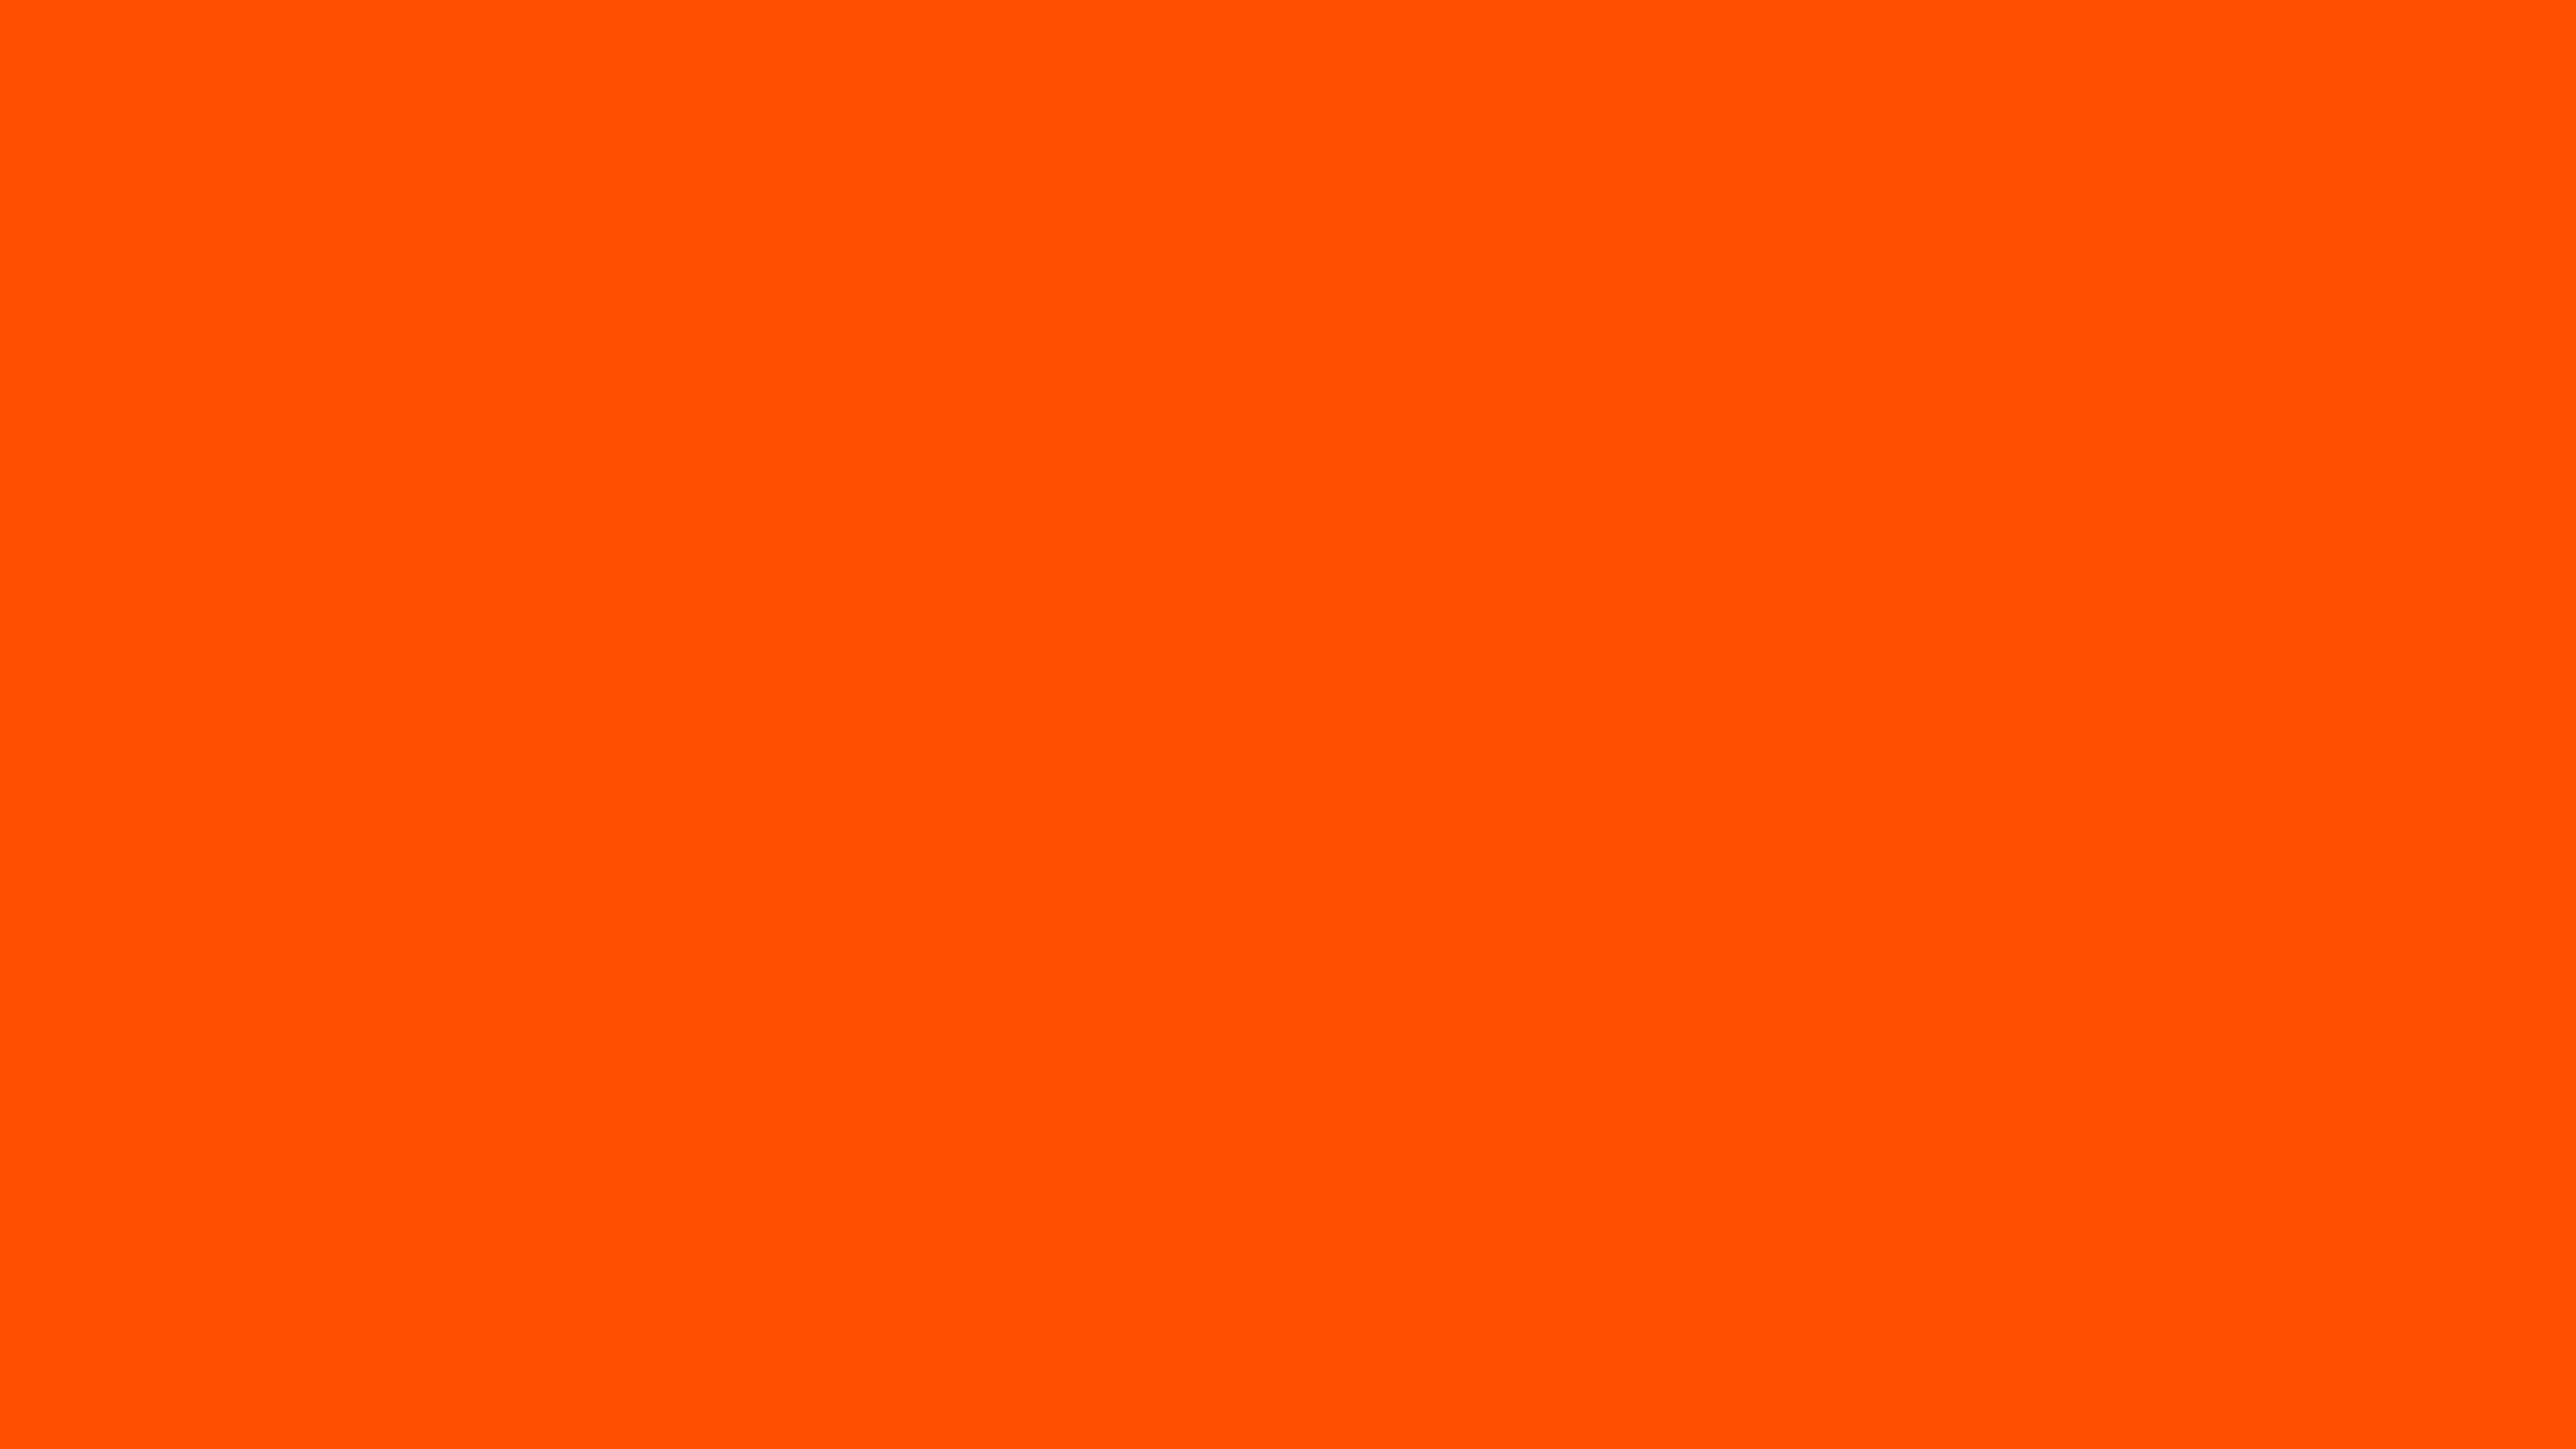 7680x4320 International Orange Aerospace Solid Color Background